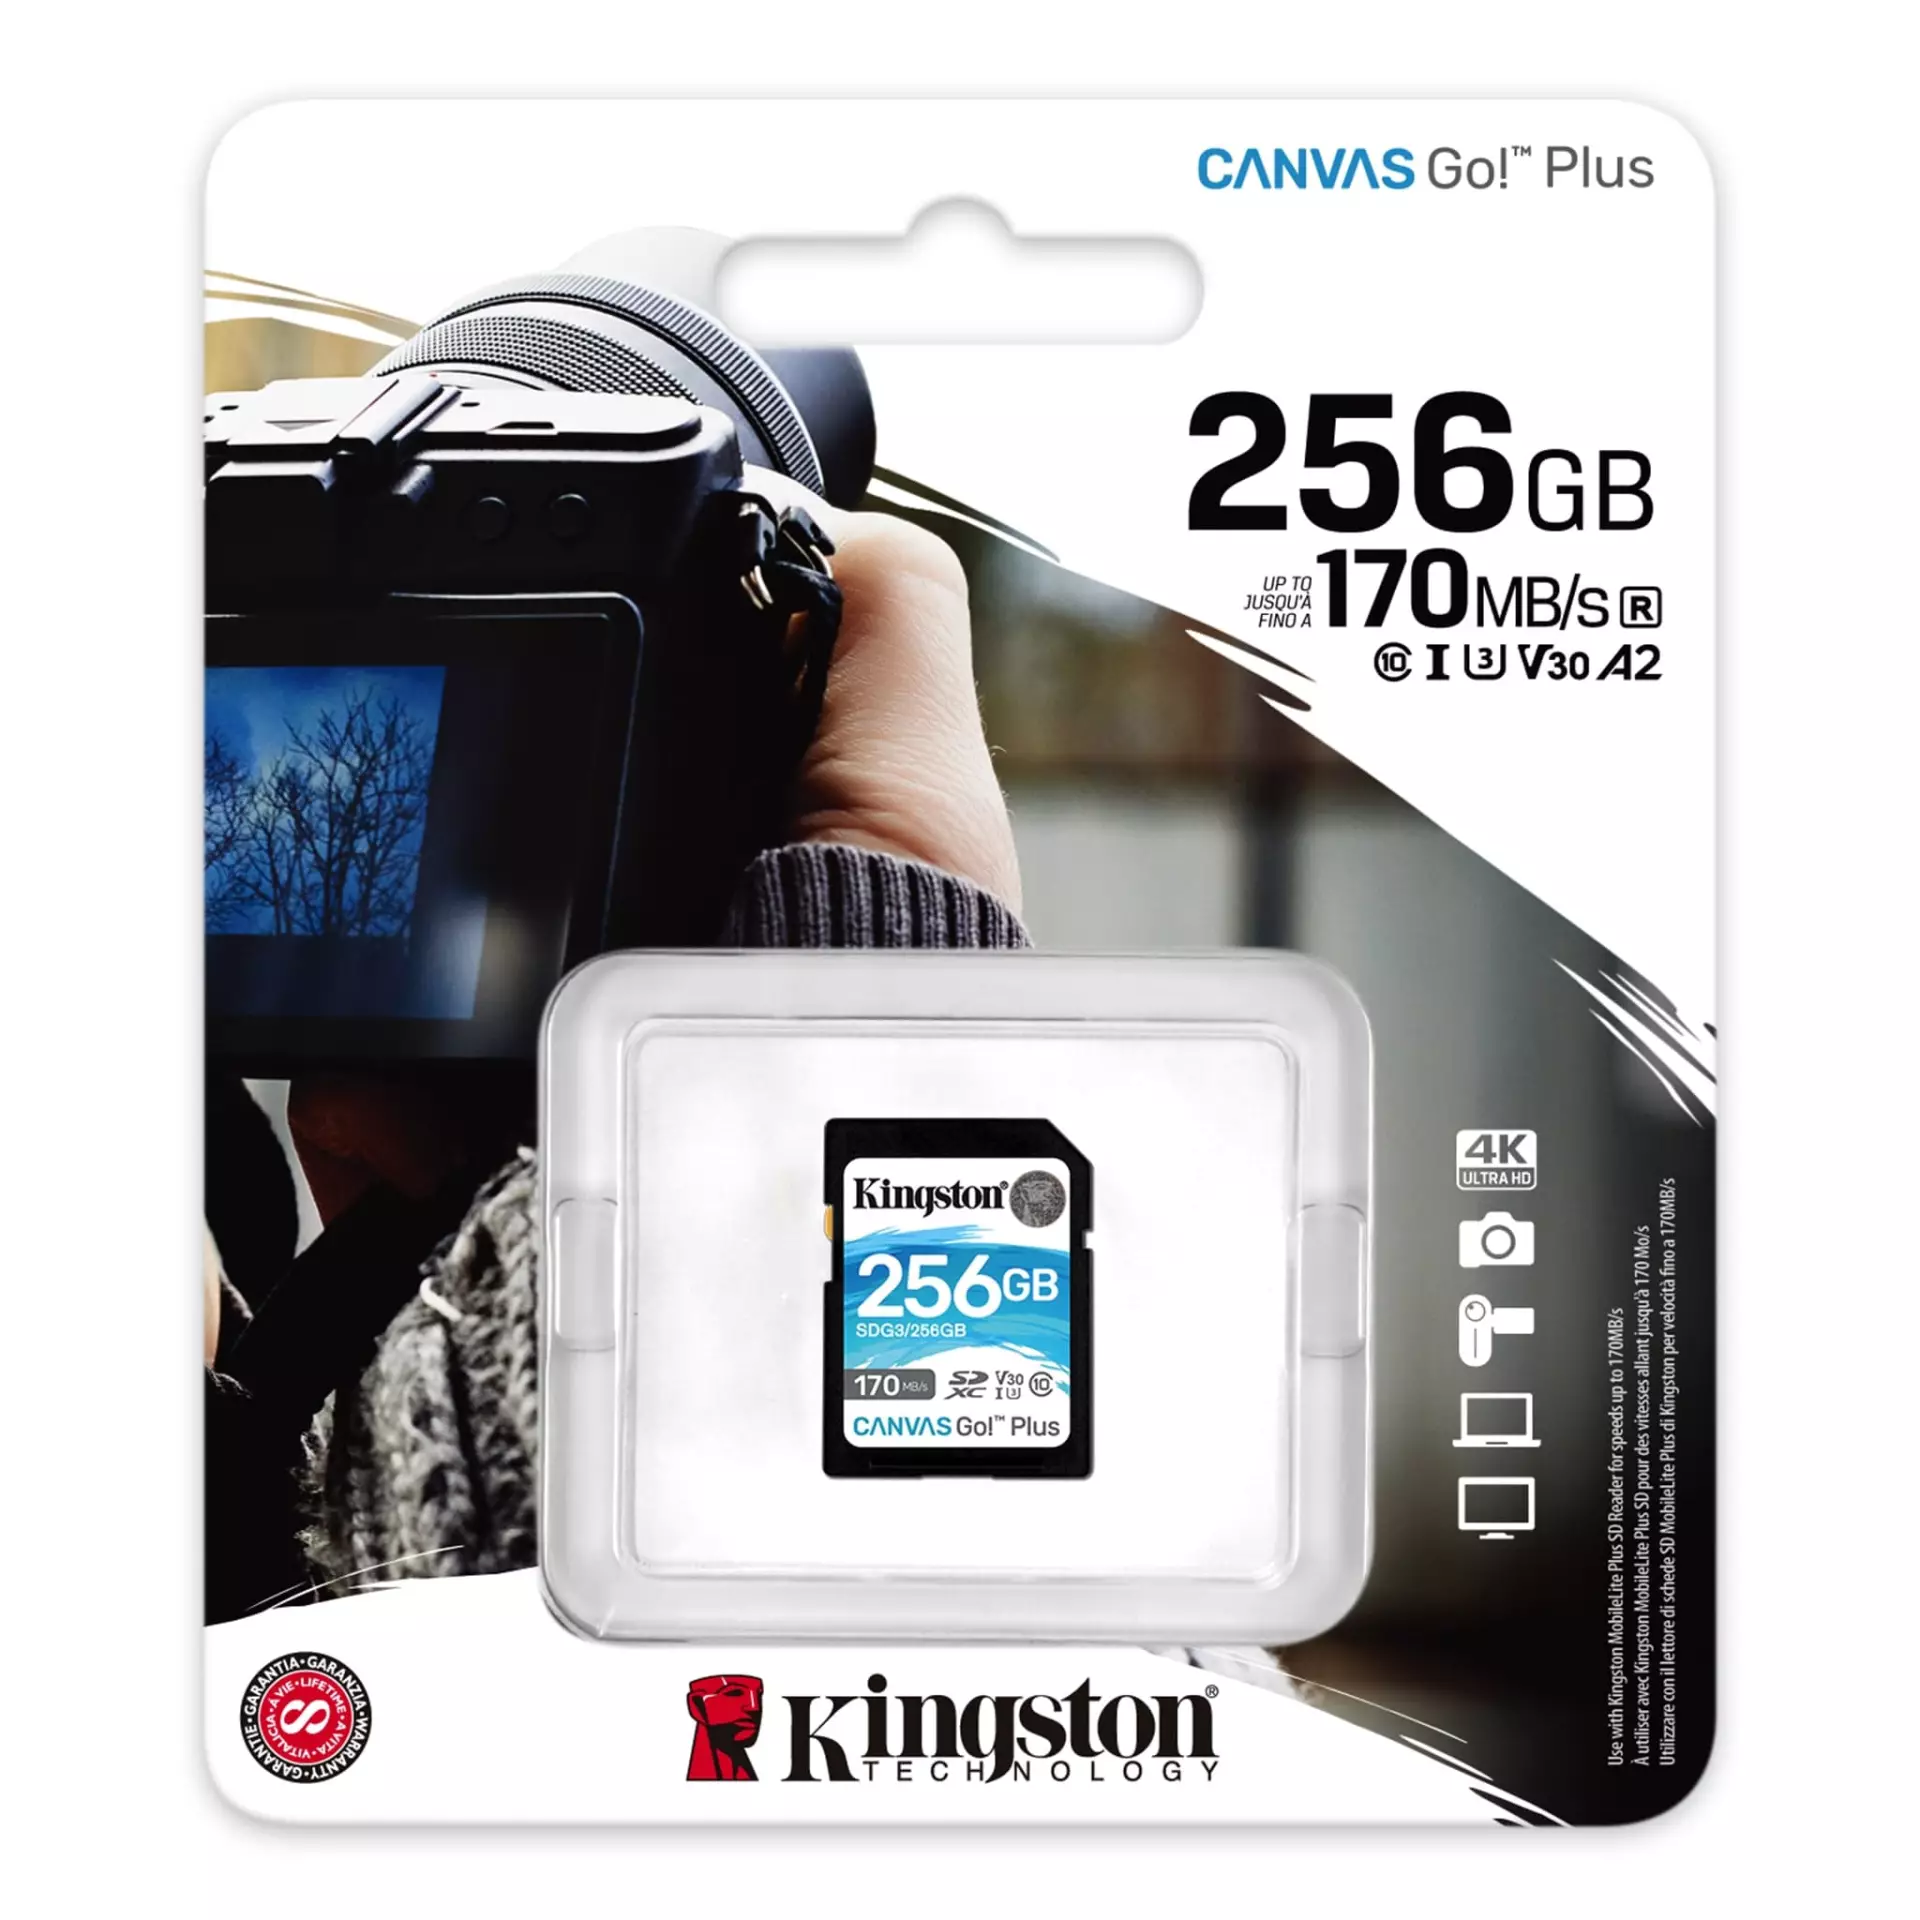 Kingston SD 256GB CanvasGoPlus